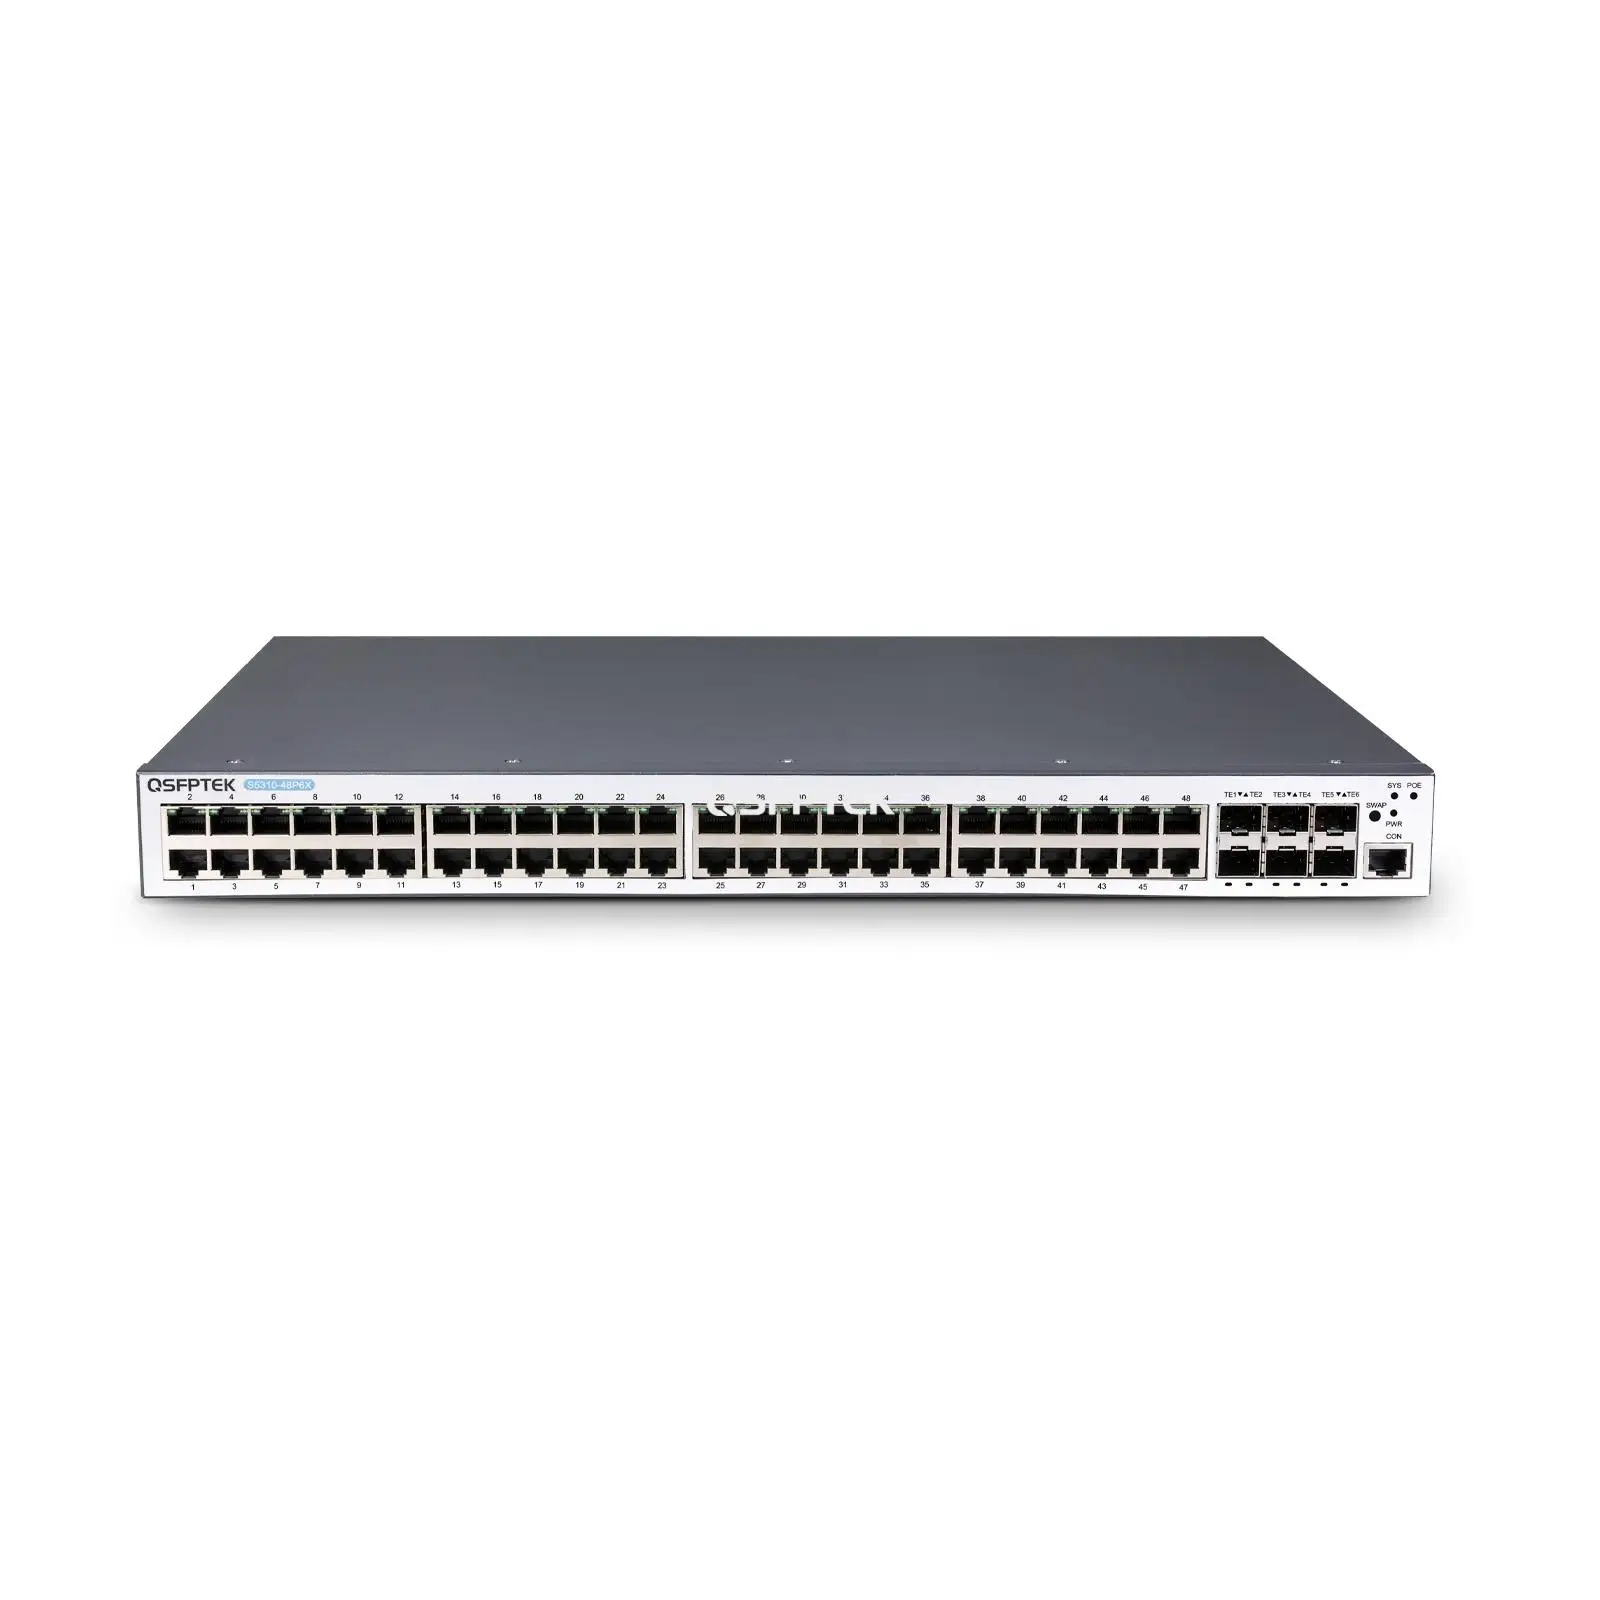 S5310-48P6X, Stackable 48-Port Gigabit Ethernet L3 PoE+ Switch, 760W, with  10GbE SFP+ Uplinks - QSFPTEK